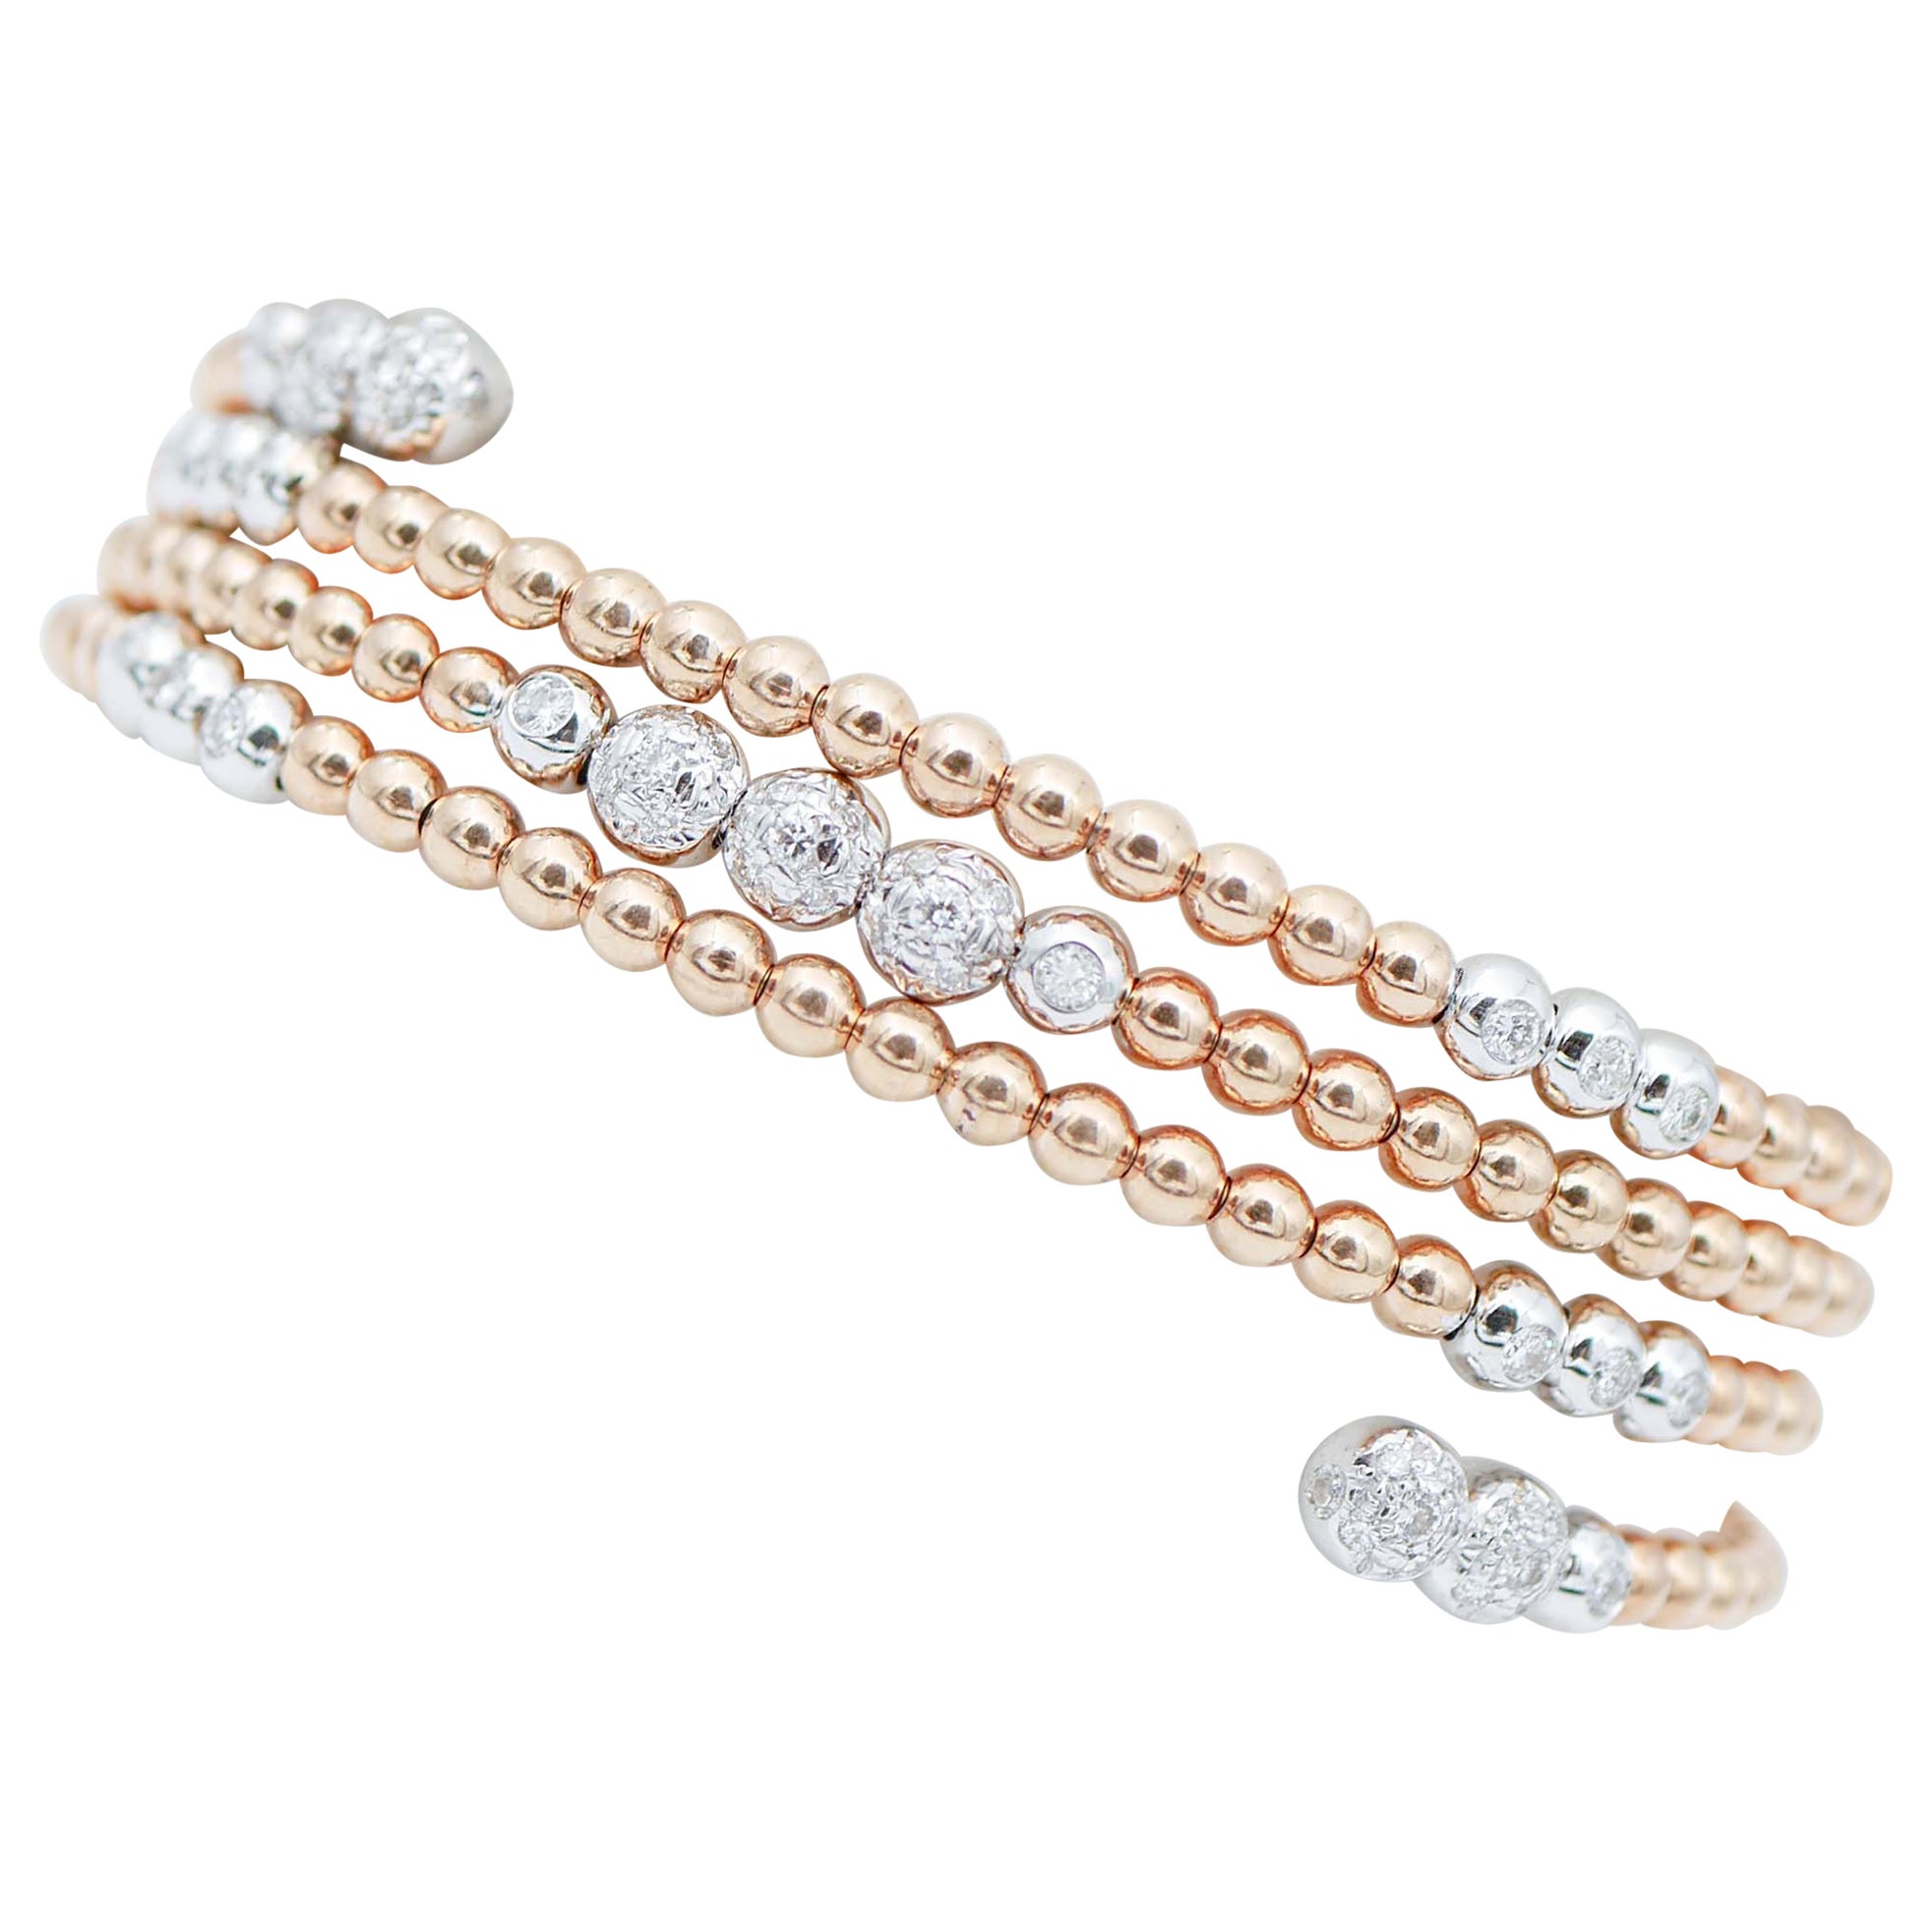 Bracelet moderne en or rose et blanc 18 carats et diamants.